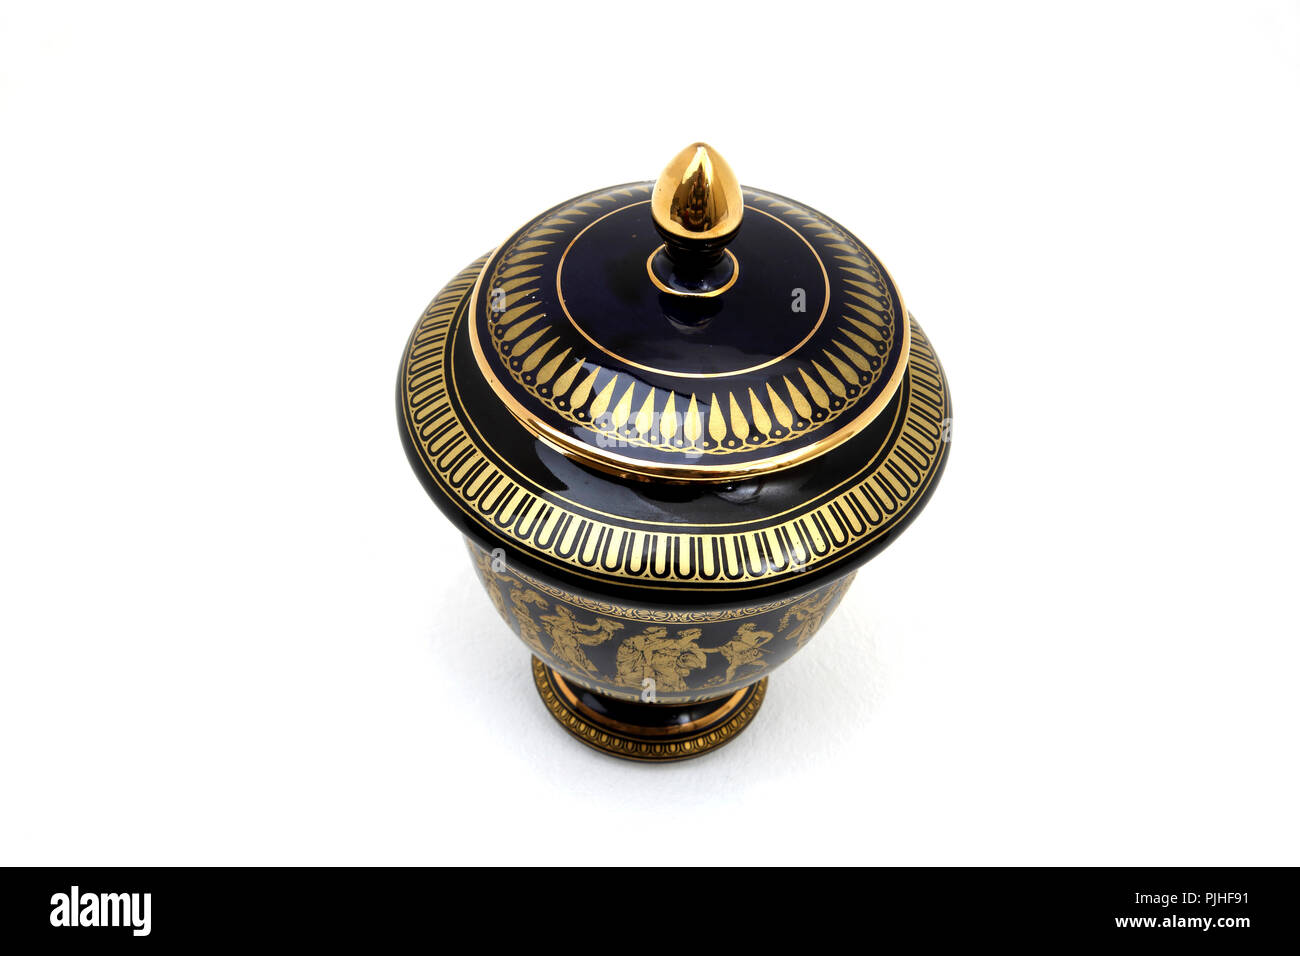 Black Greek Key Urn with 24 Carot Gold Design Stock Photo